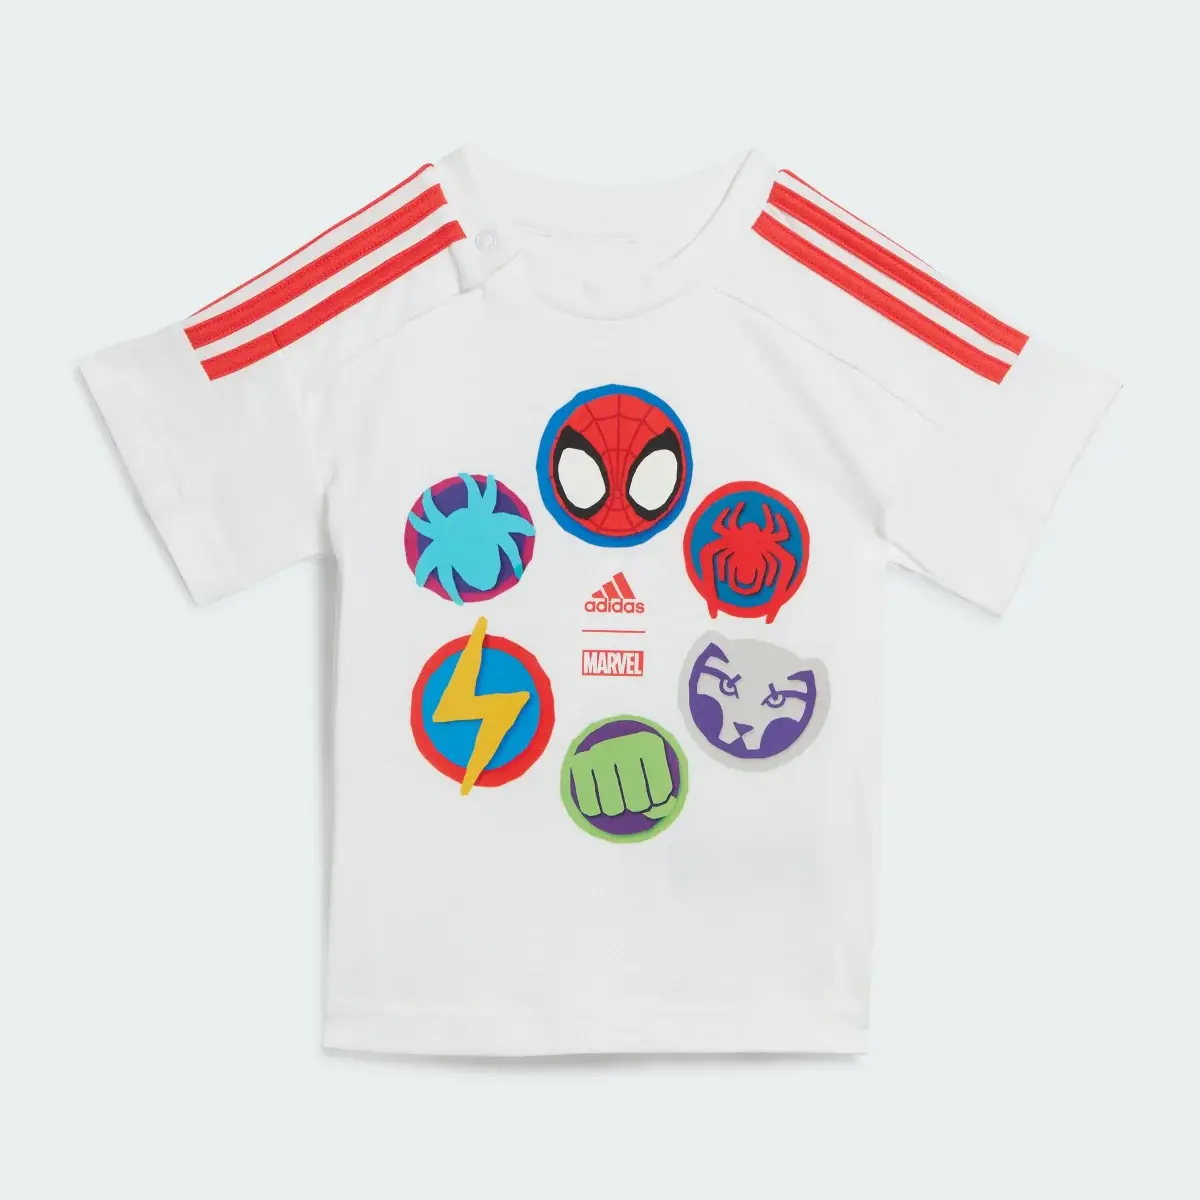 Adidas x Marvel Spider-Man Tee and Shorts Set. 3